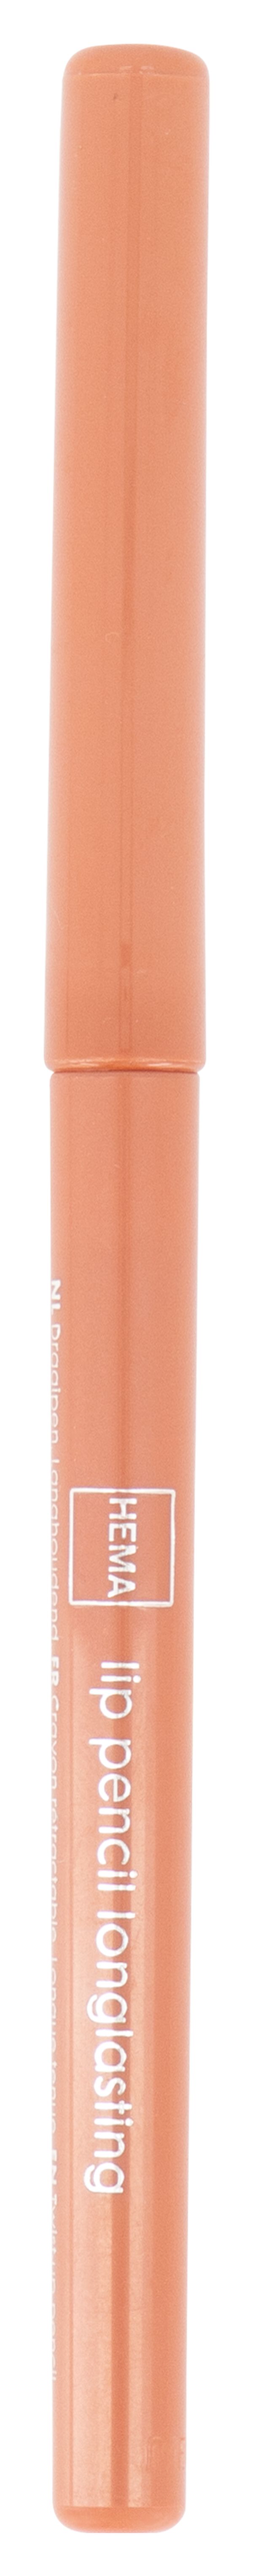 crayon à lèvres marron - 11230127 - HEMA